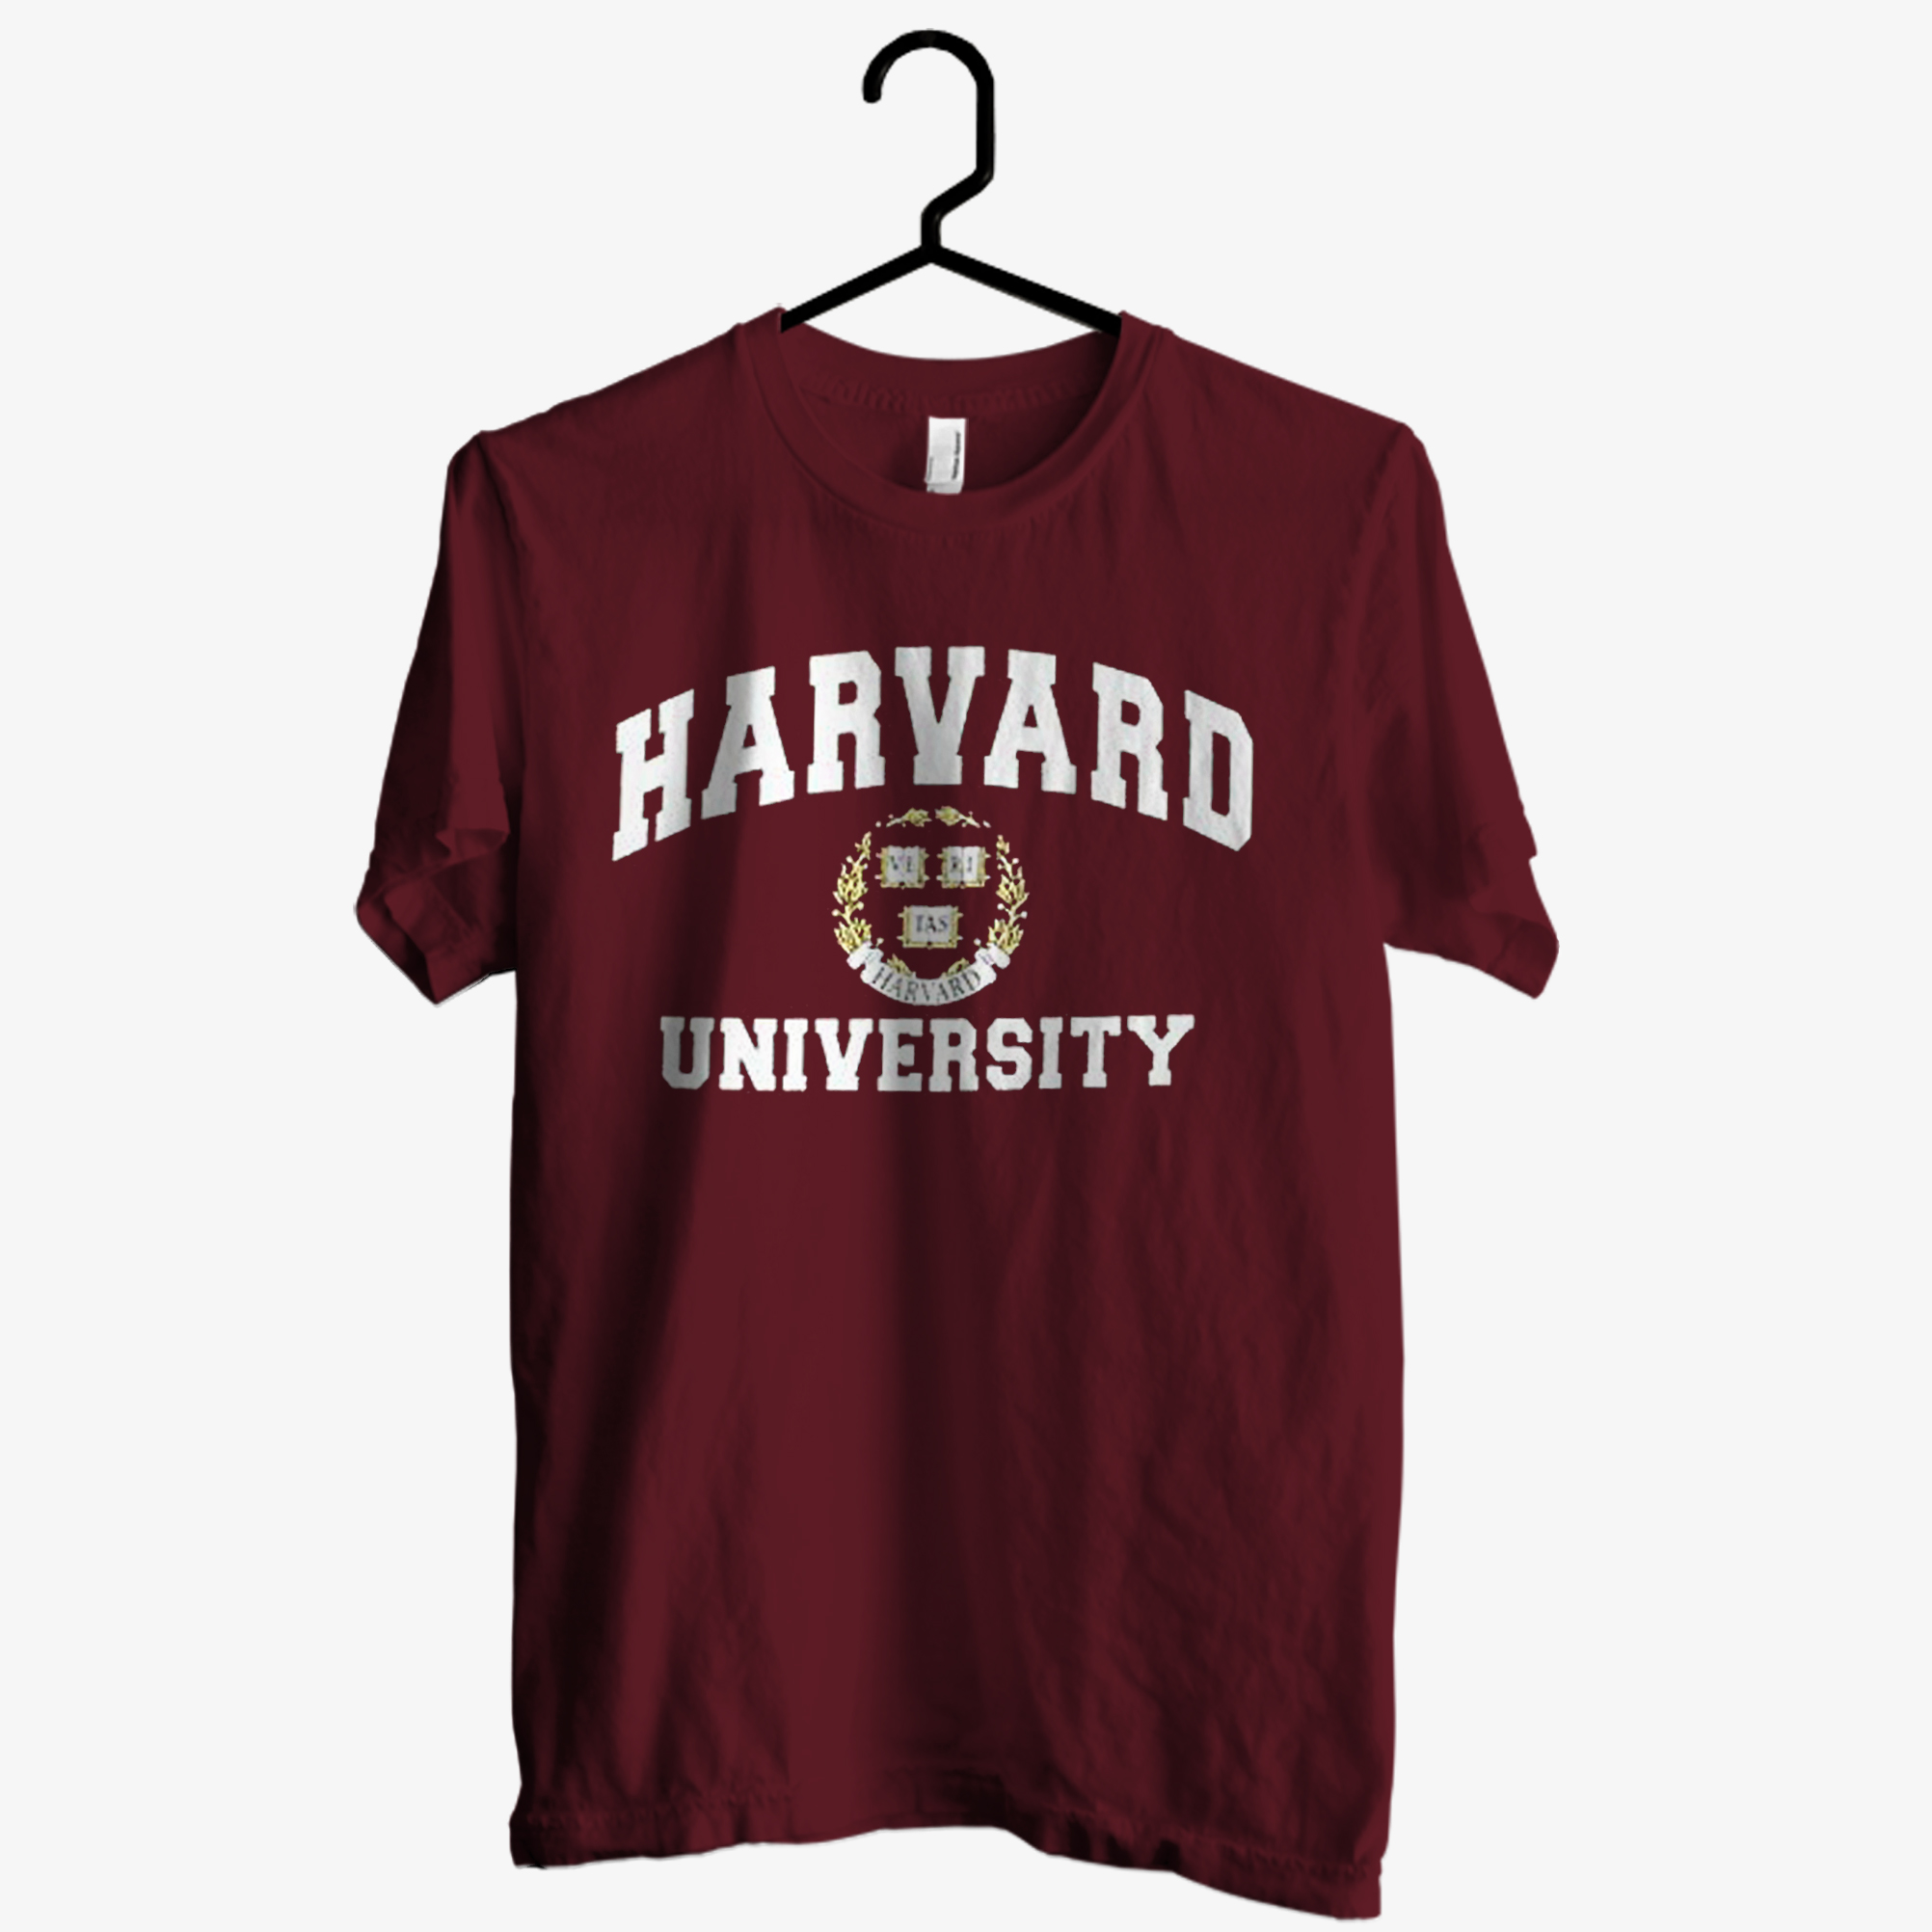 Harvard University T shirt